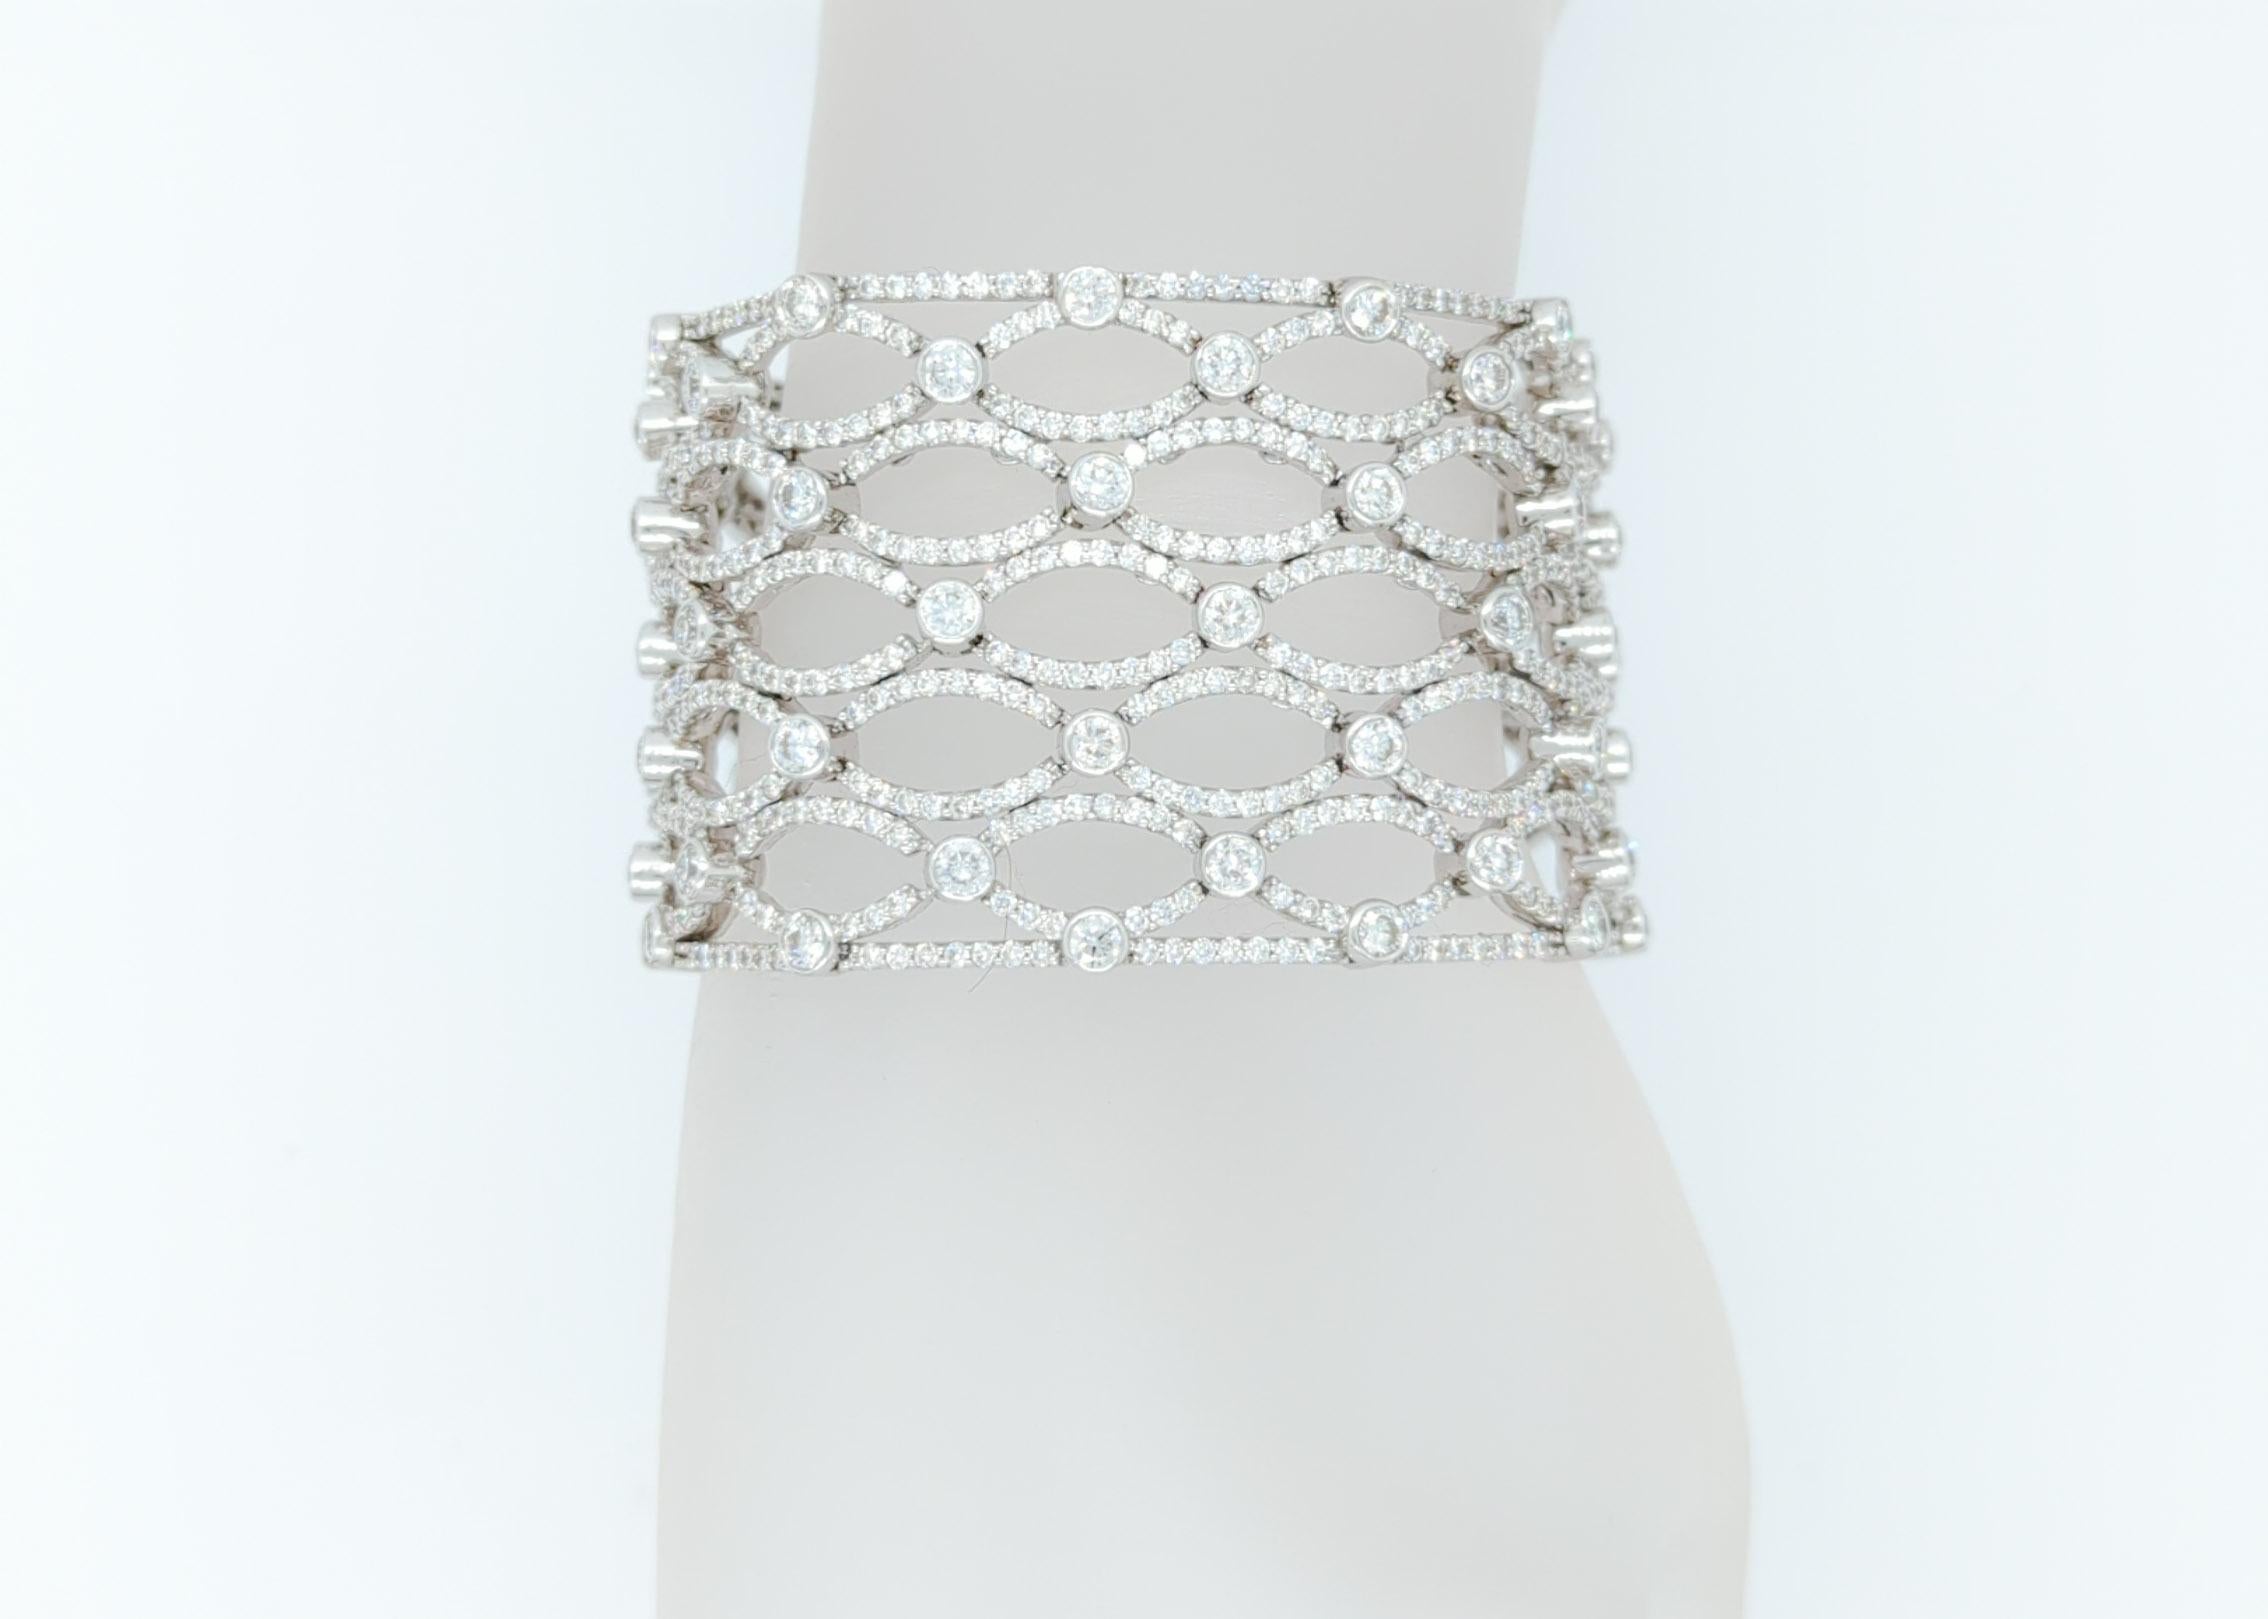 Beautiful white diamond round bracelet handmade in 18k white gold.  Length is 7.5